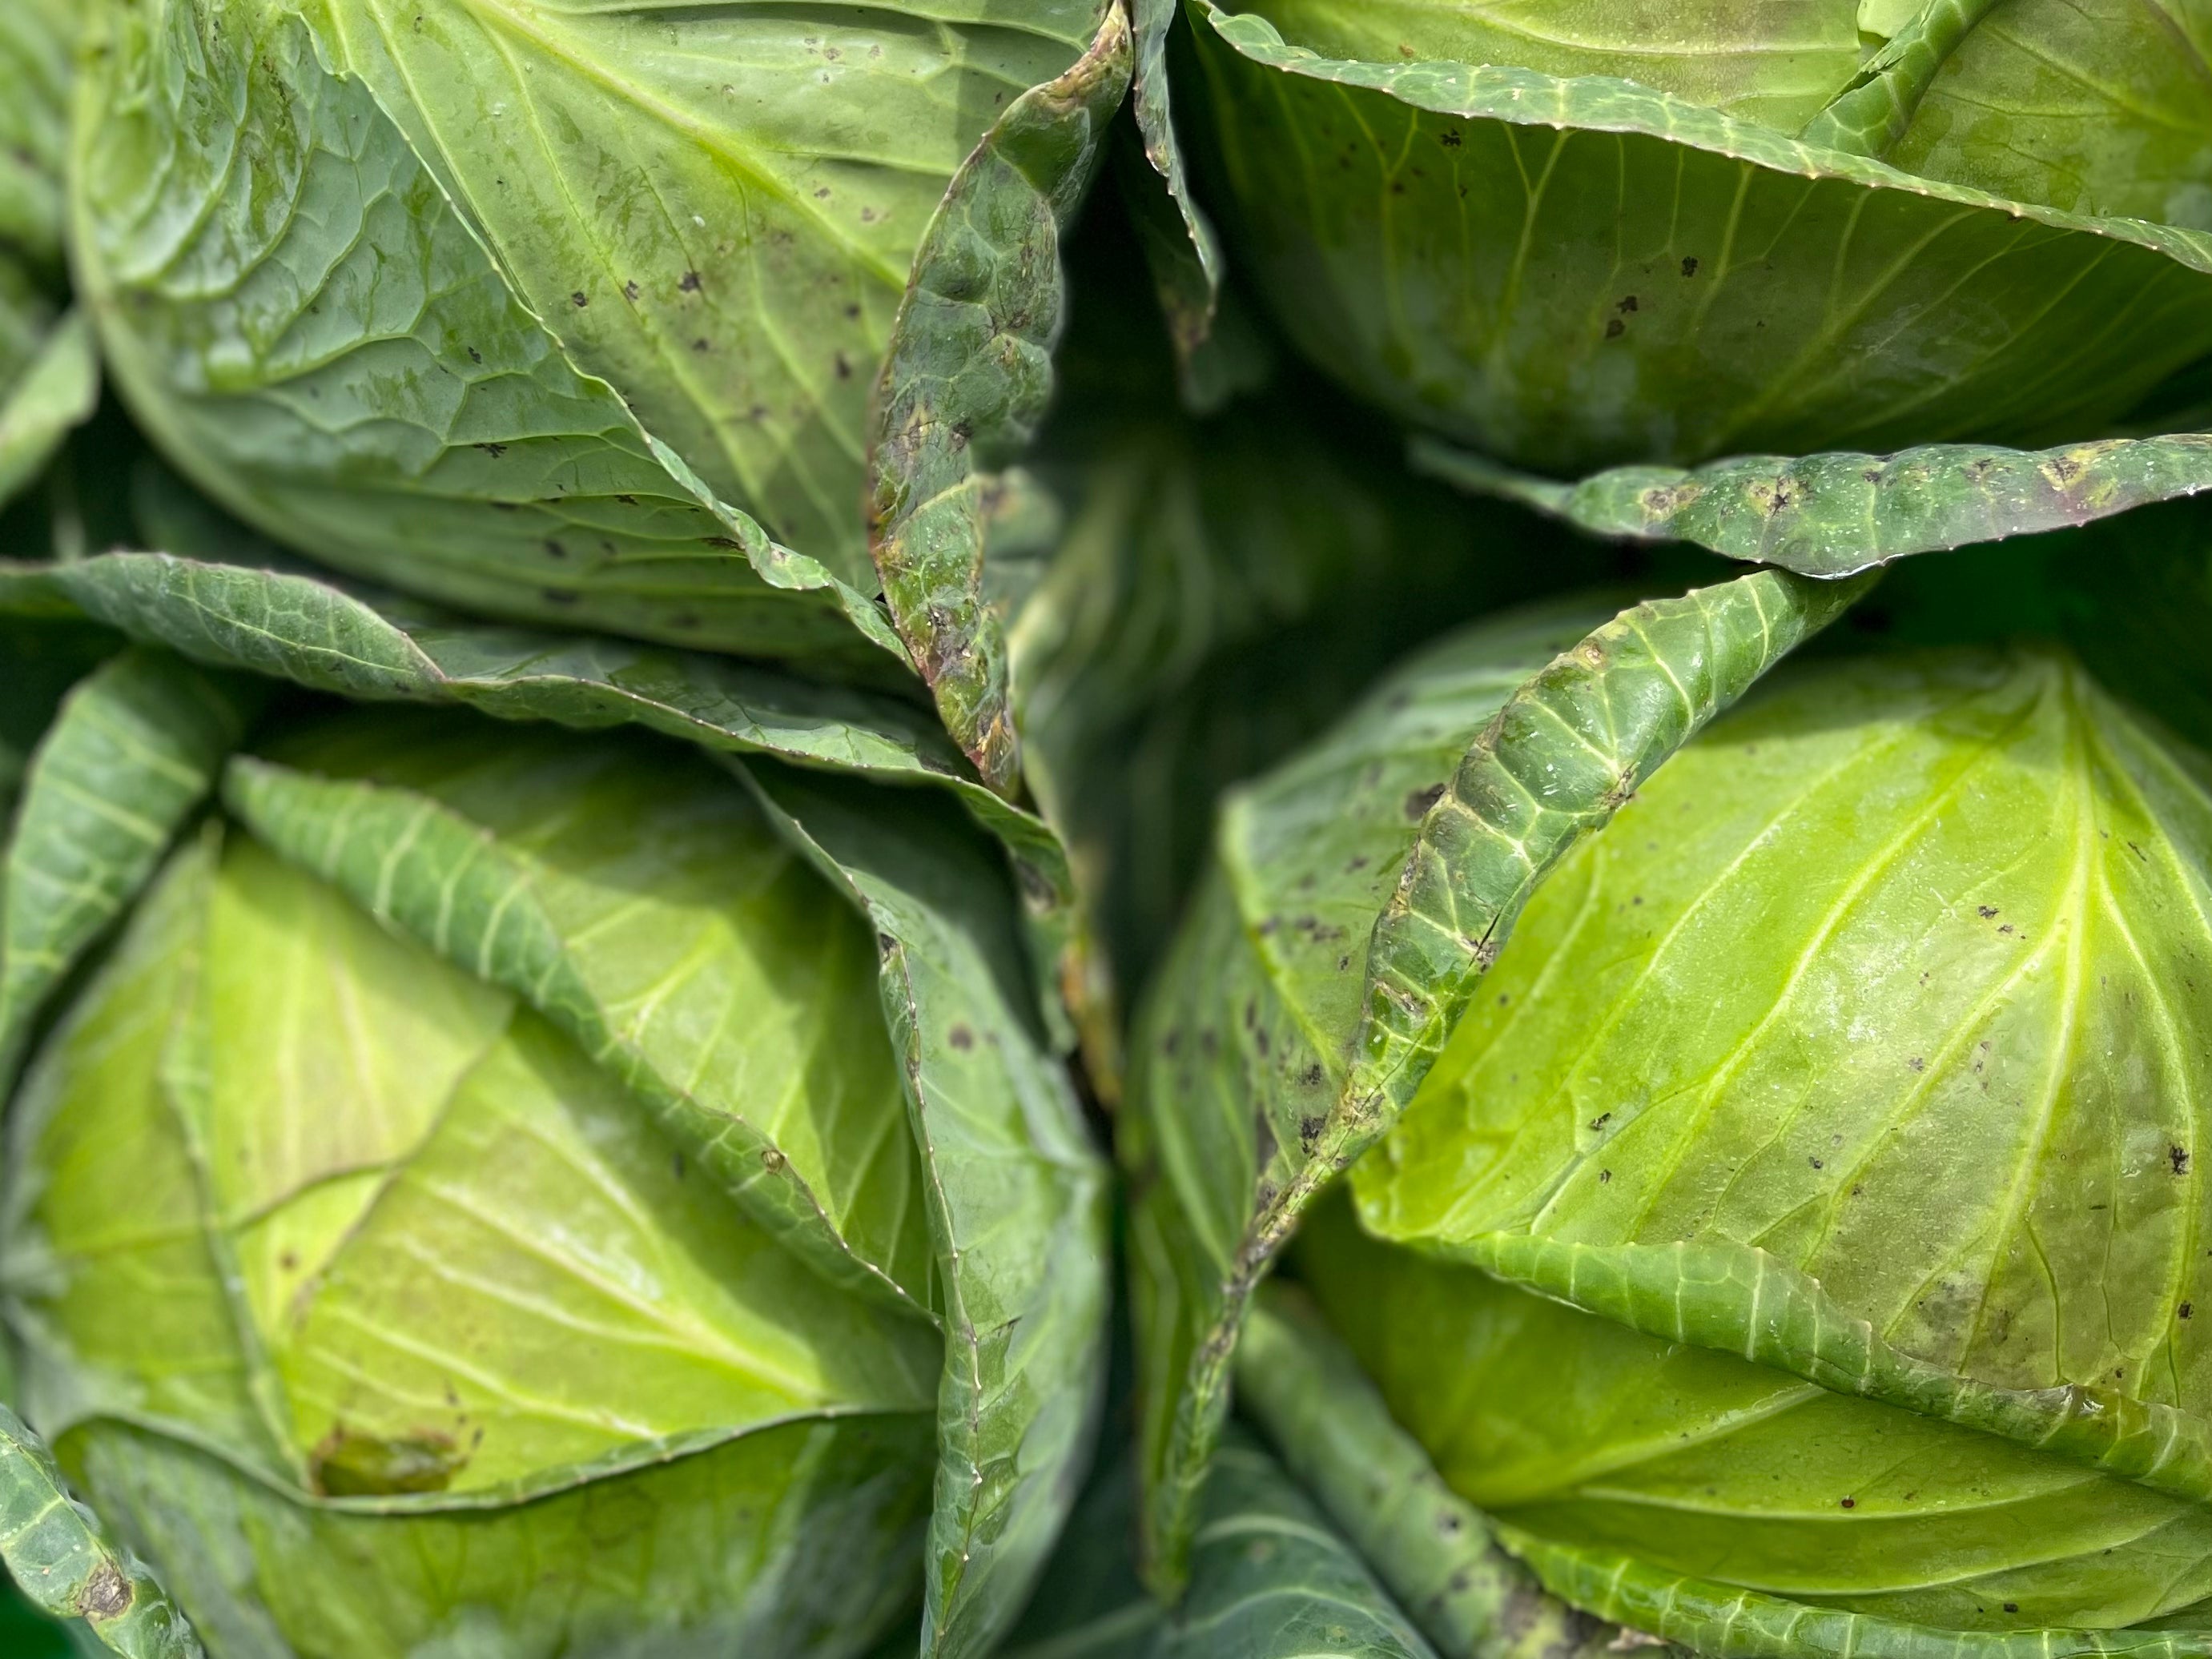 NZ Organic Cabbage - Green